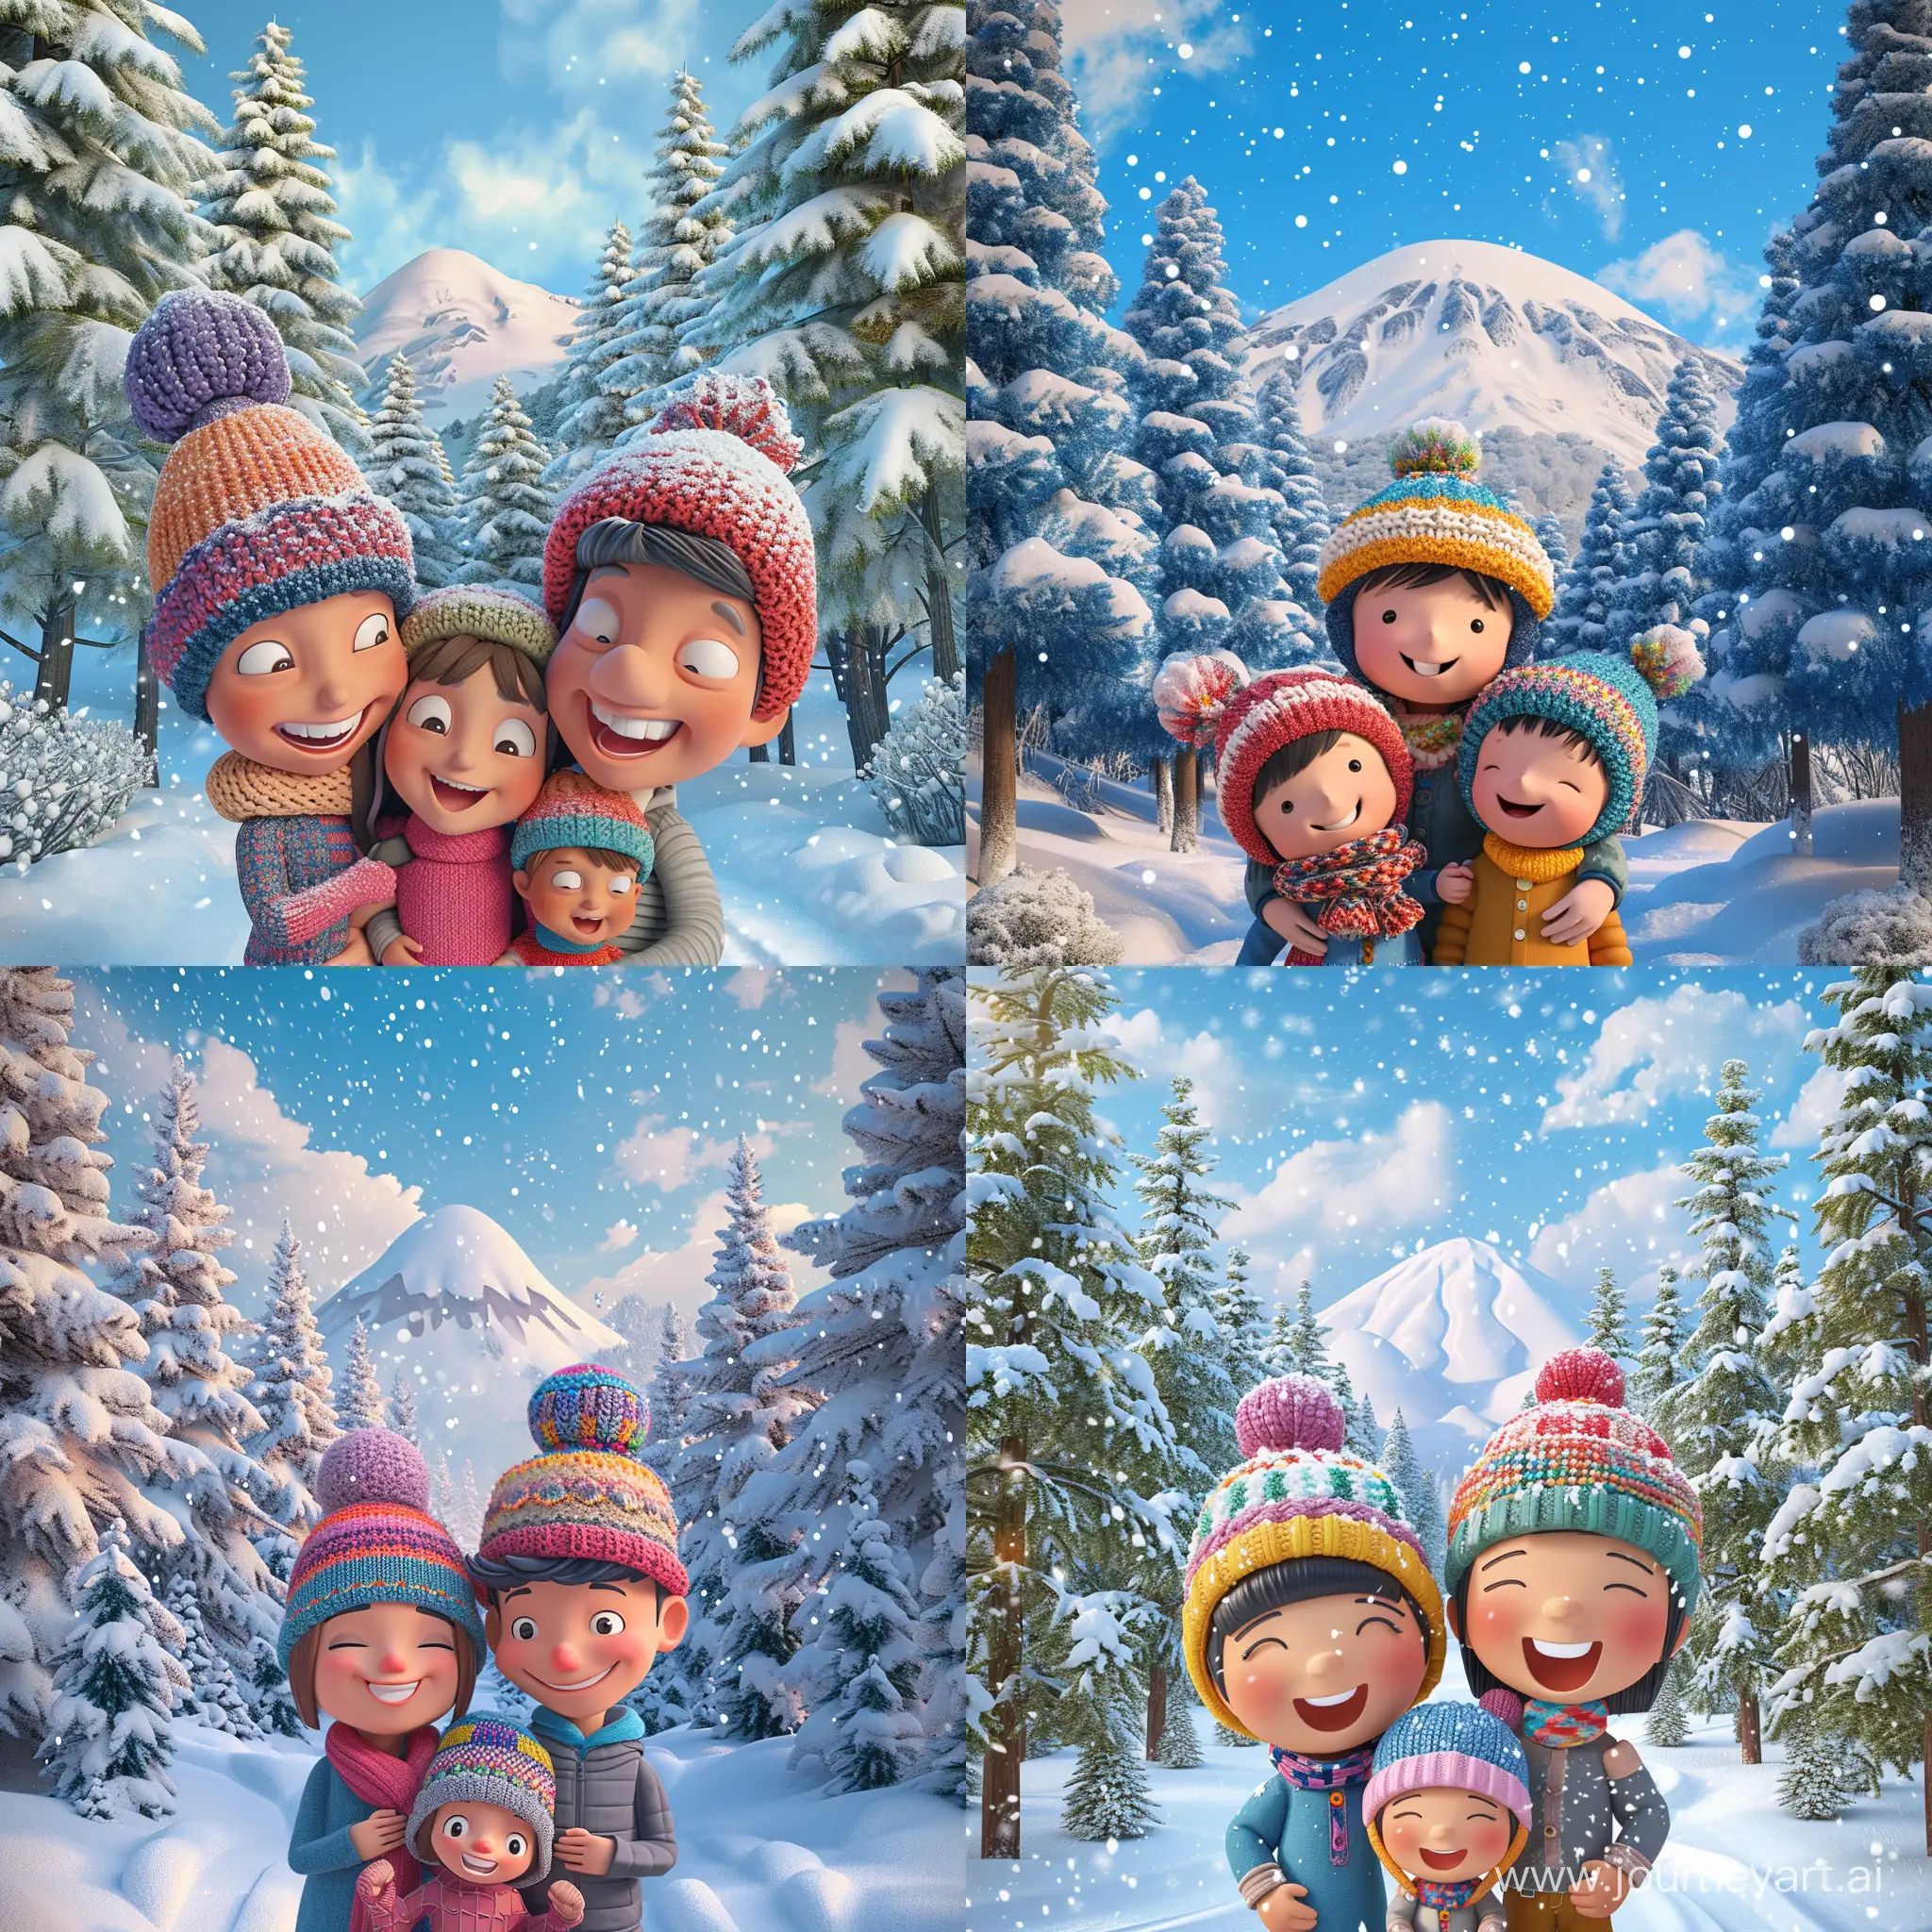 Joyful-3D-Cartoon-Family-in-Winter-Wonderland